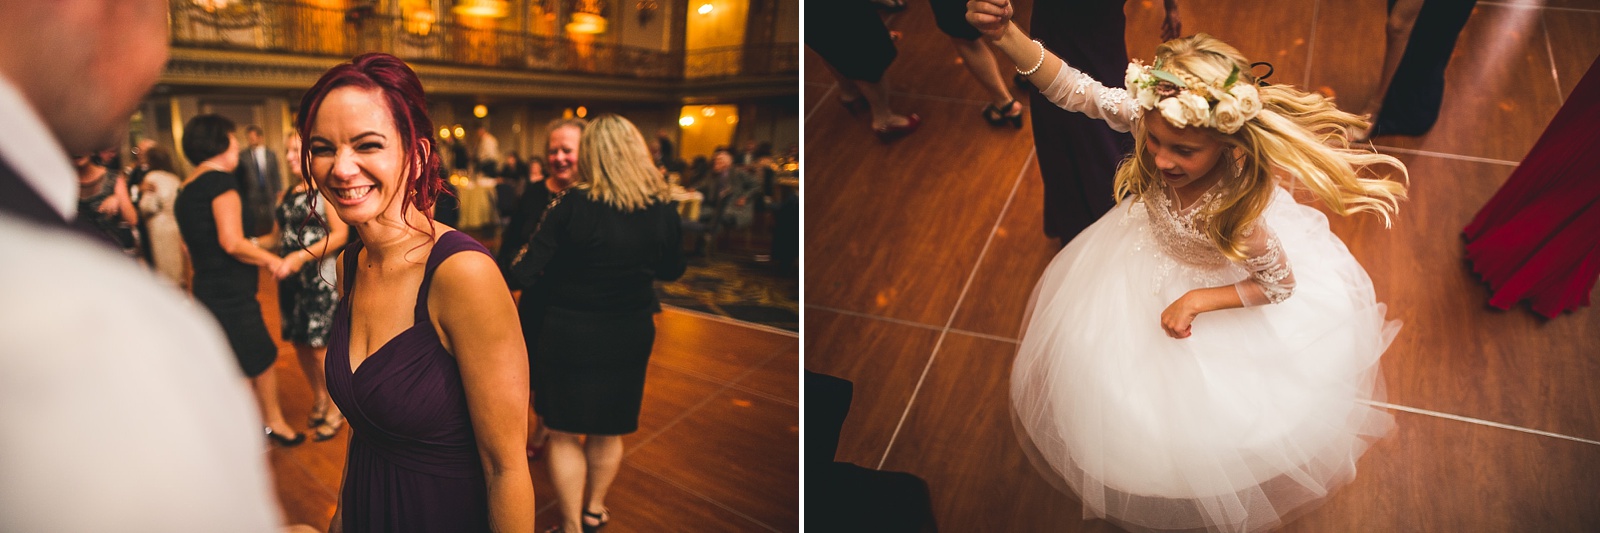 83 fun reception photos at chicago wedding at the hilton - Hilton Chicago Wedding Photographer // Sarah + Aaron